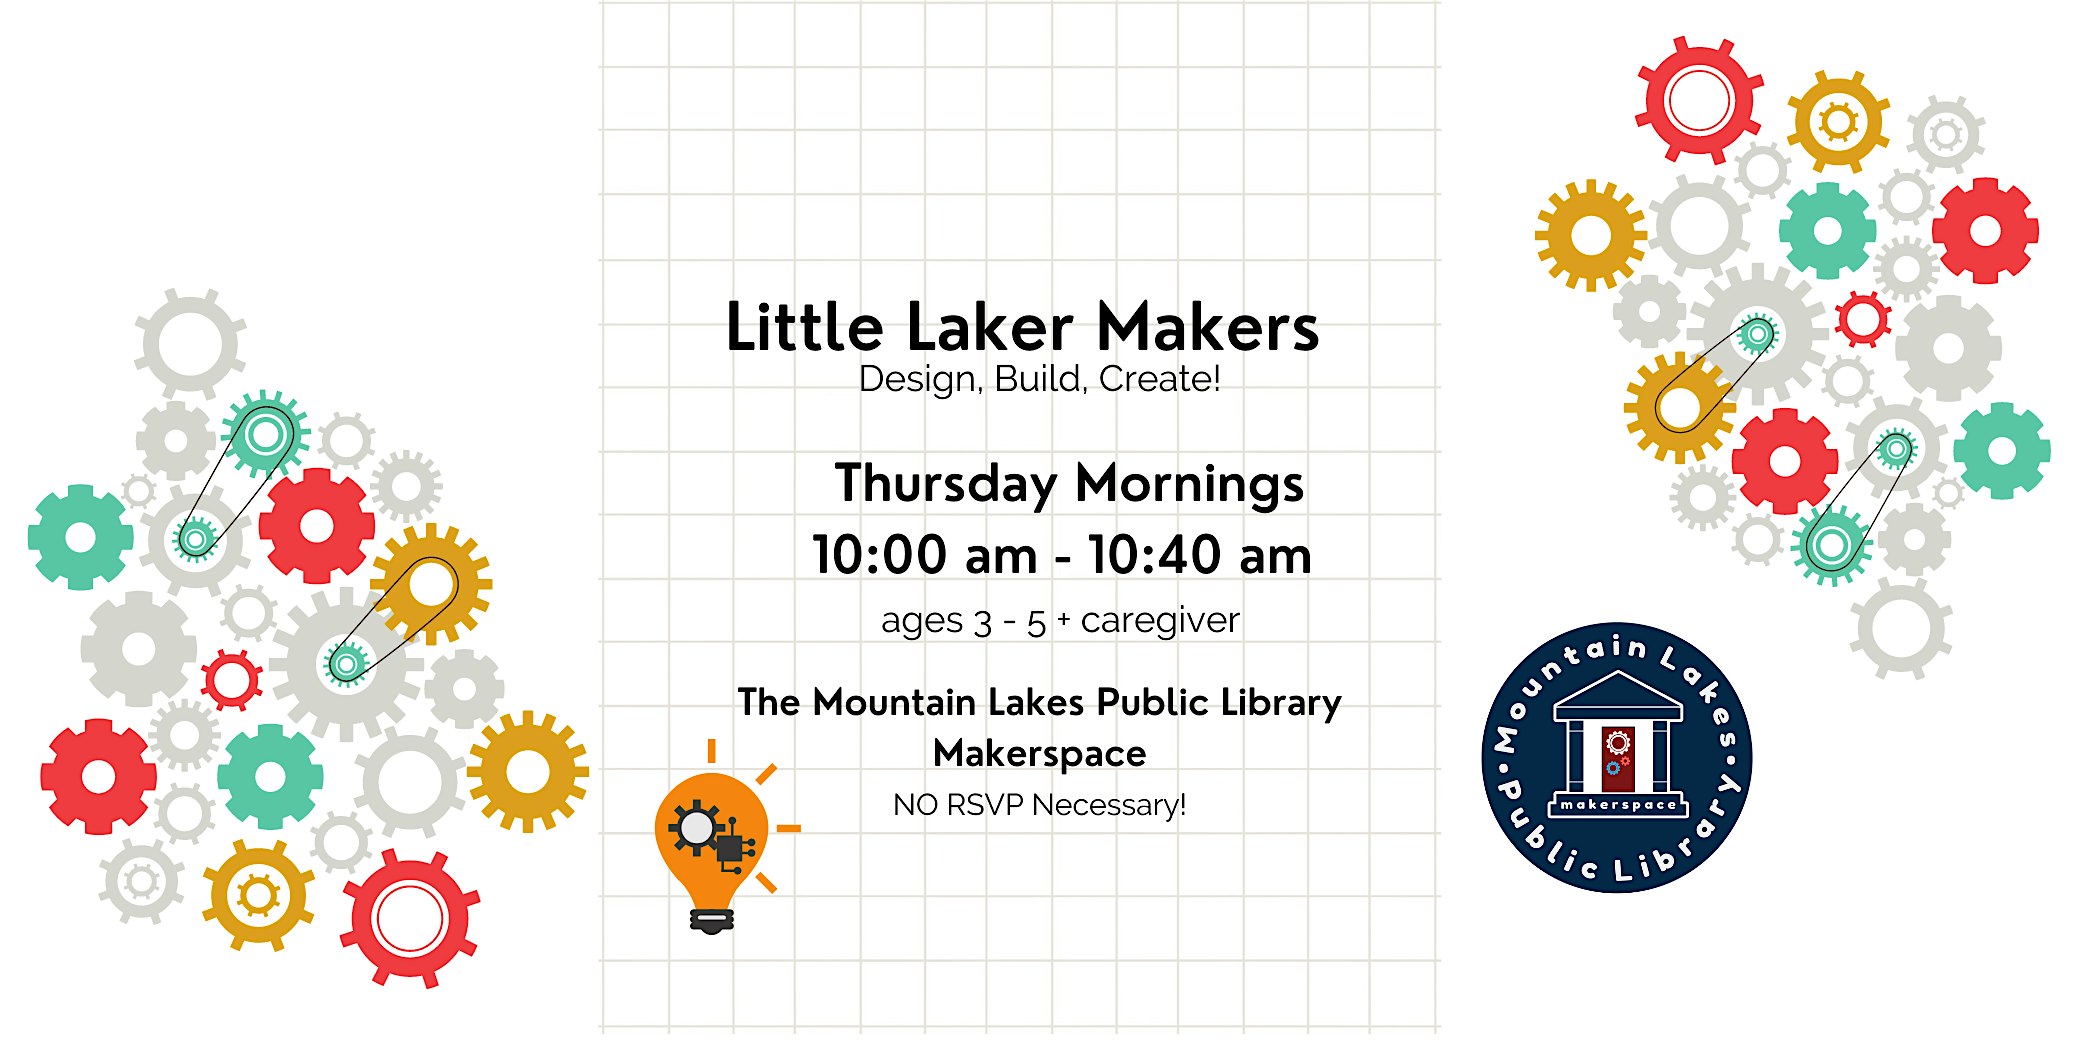 Little Laker Makers